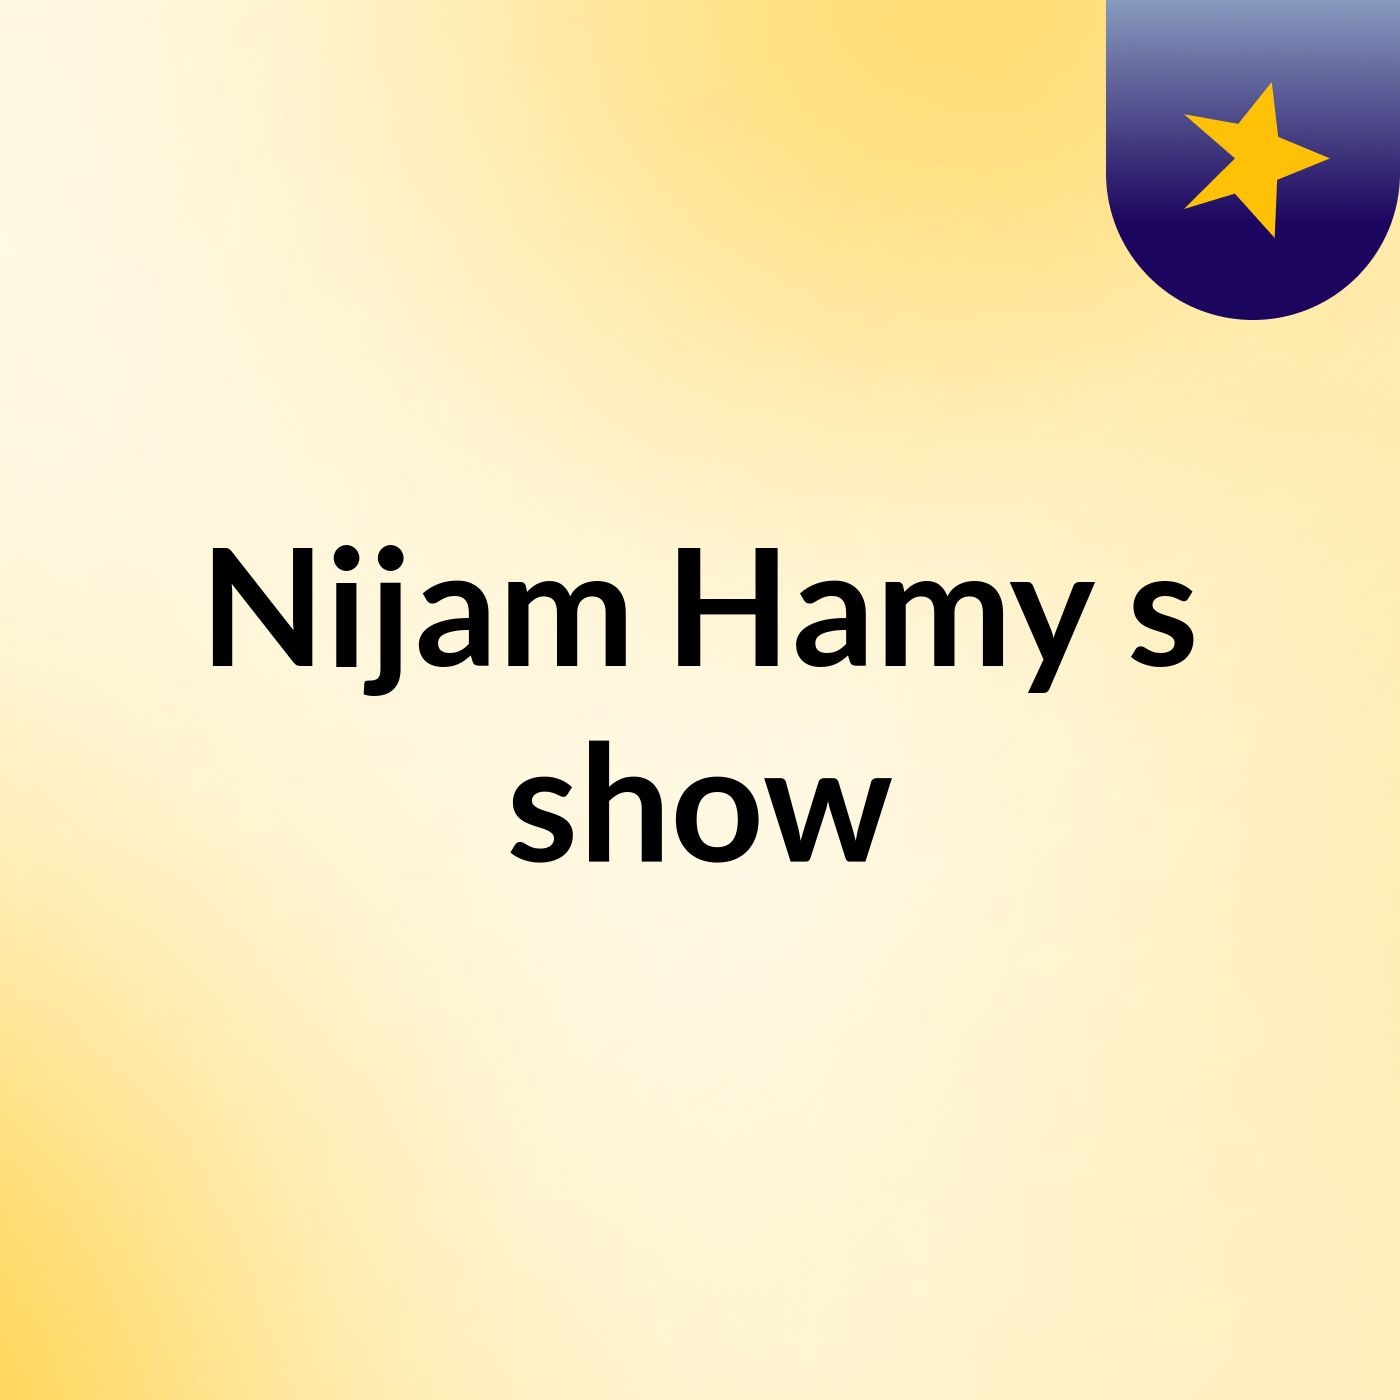 Nijam Hamy's show